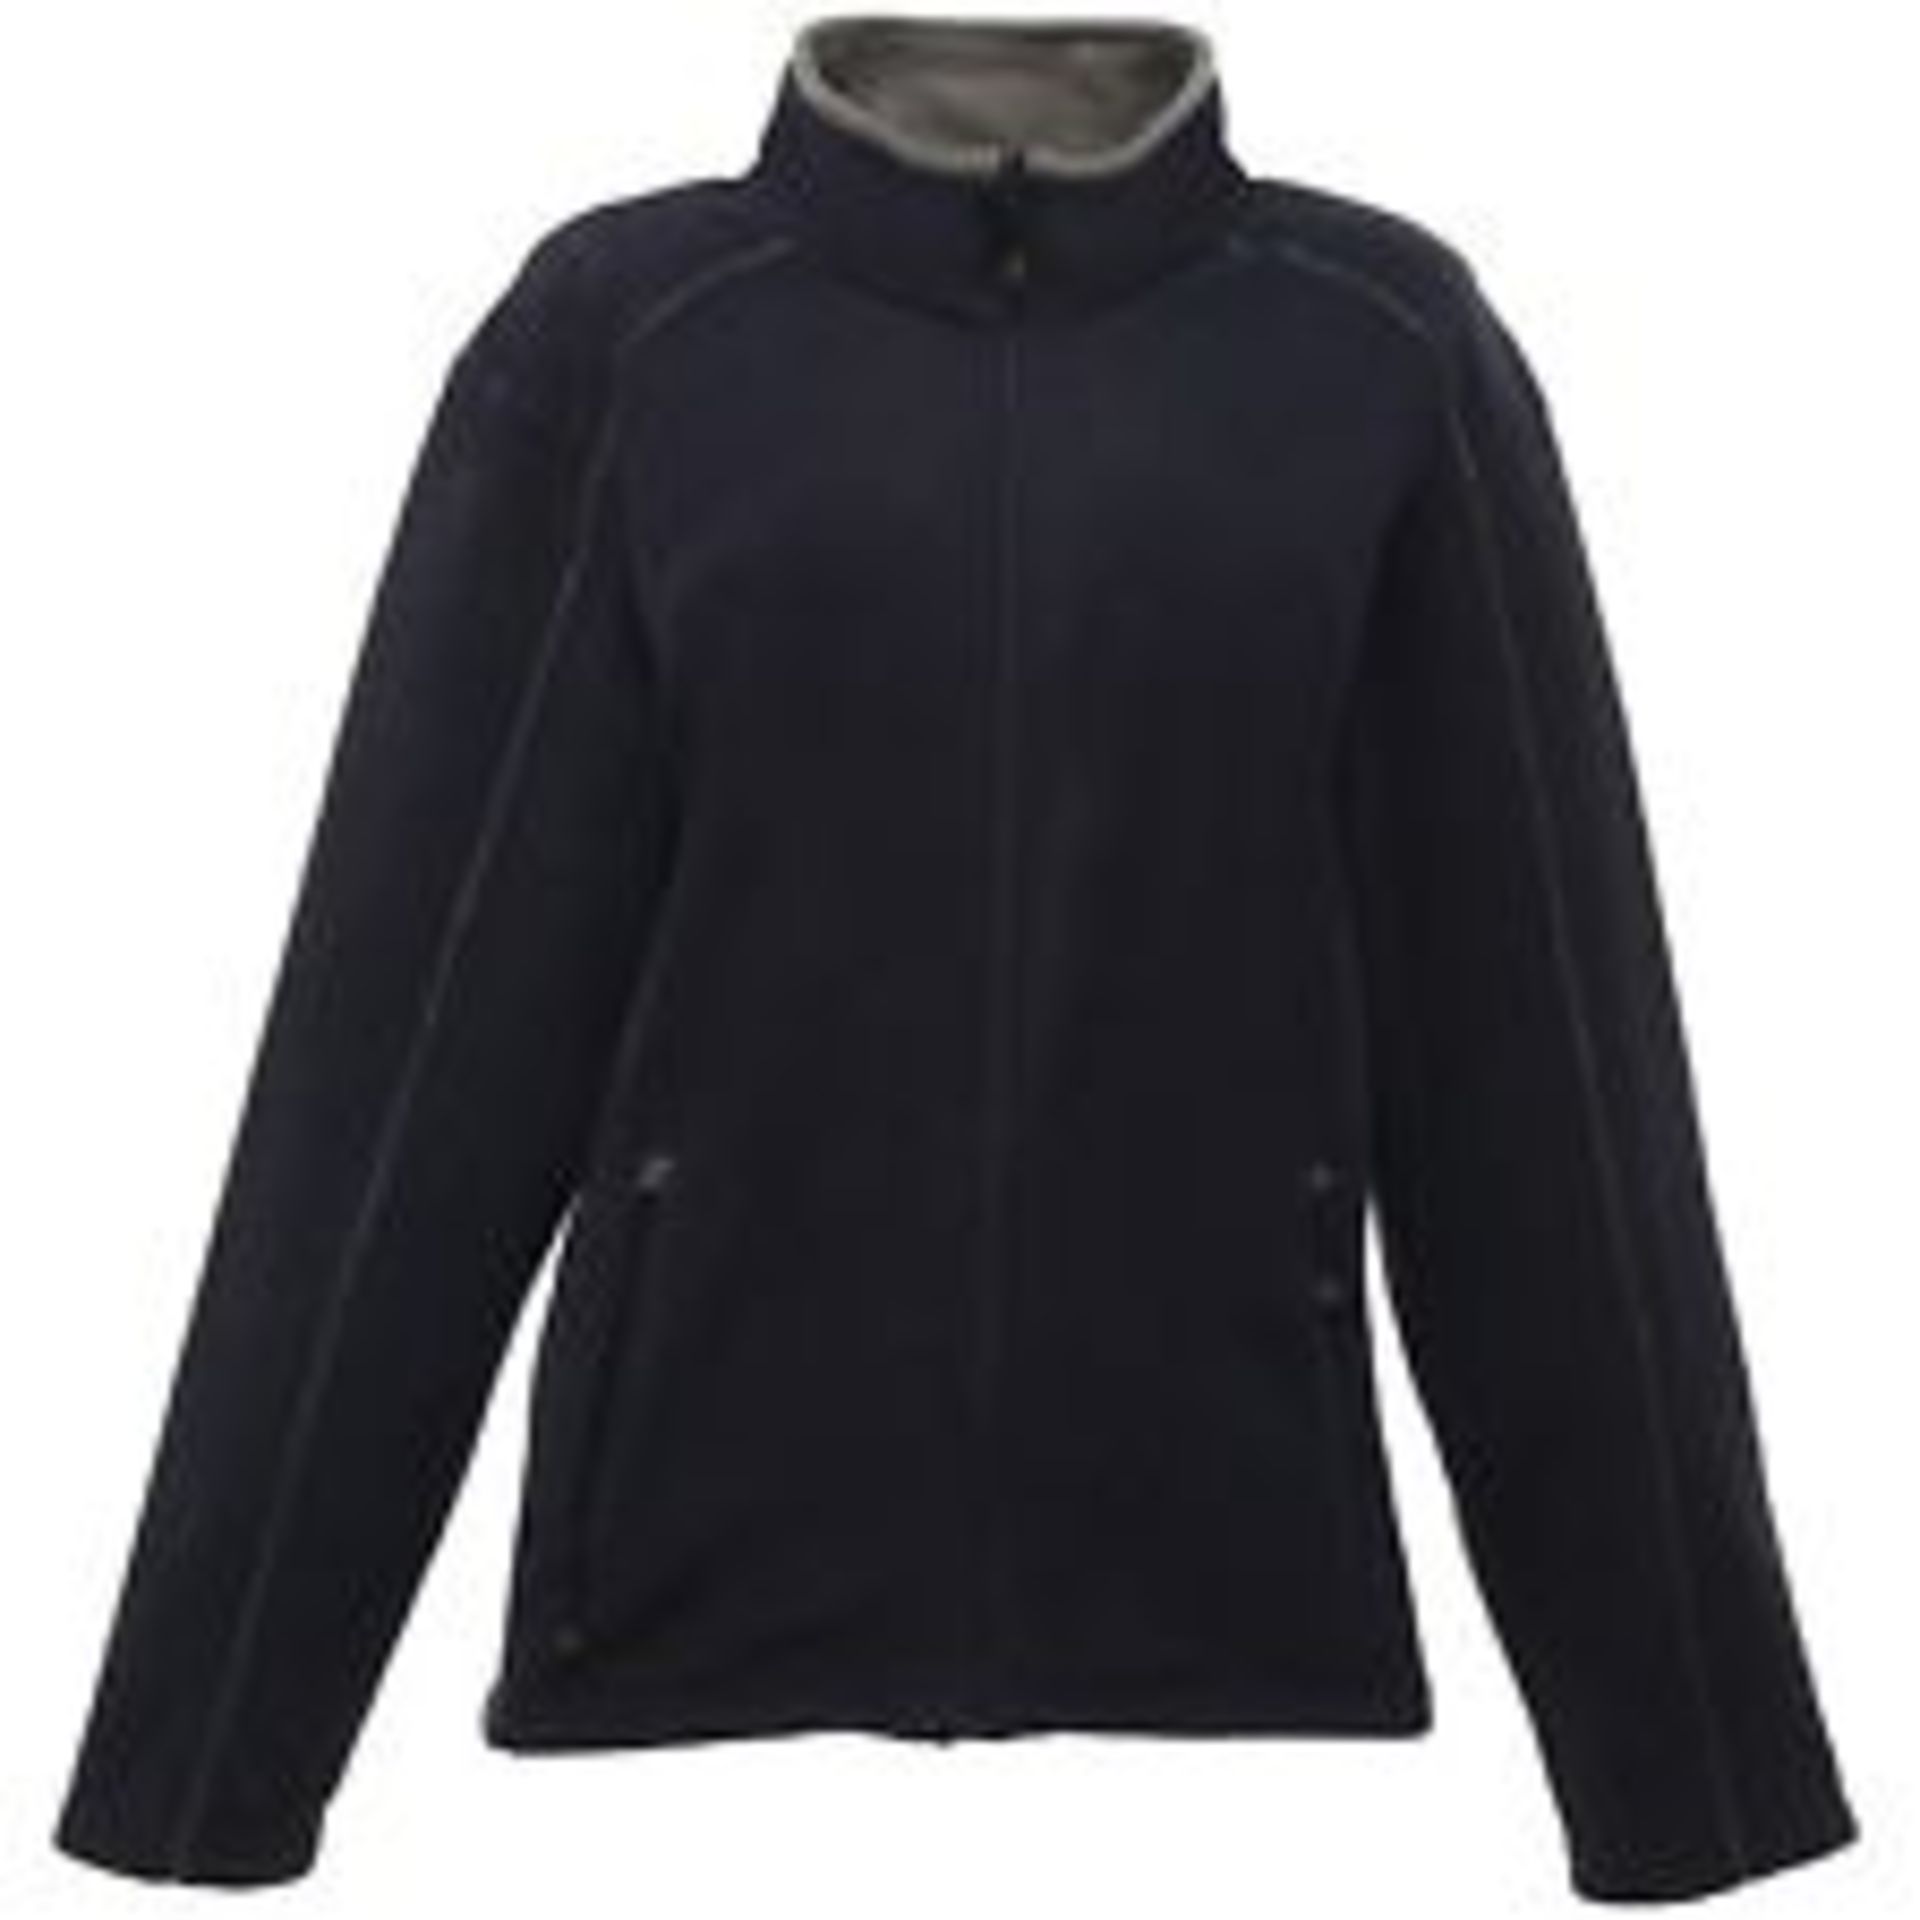 Regatta Professional Ladies Adamsville Fleece Jacket, SIZE-14 COLOUR-Navy/Smokey (BOX 2)RRP £26, 240